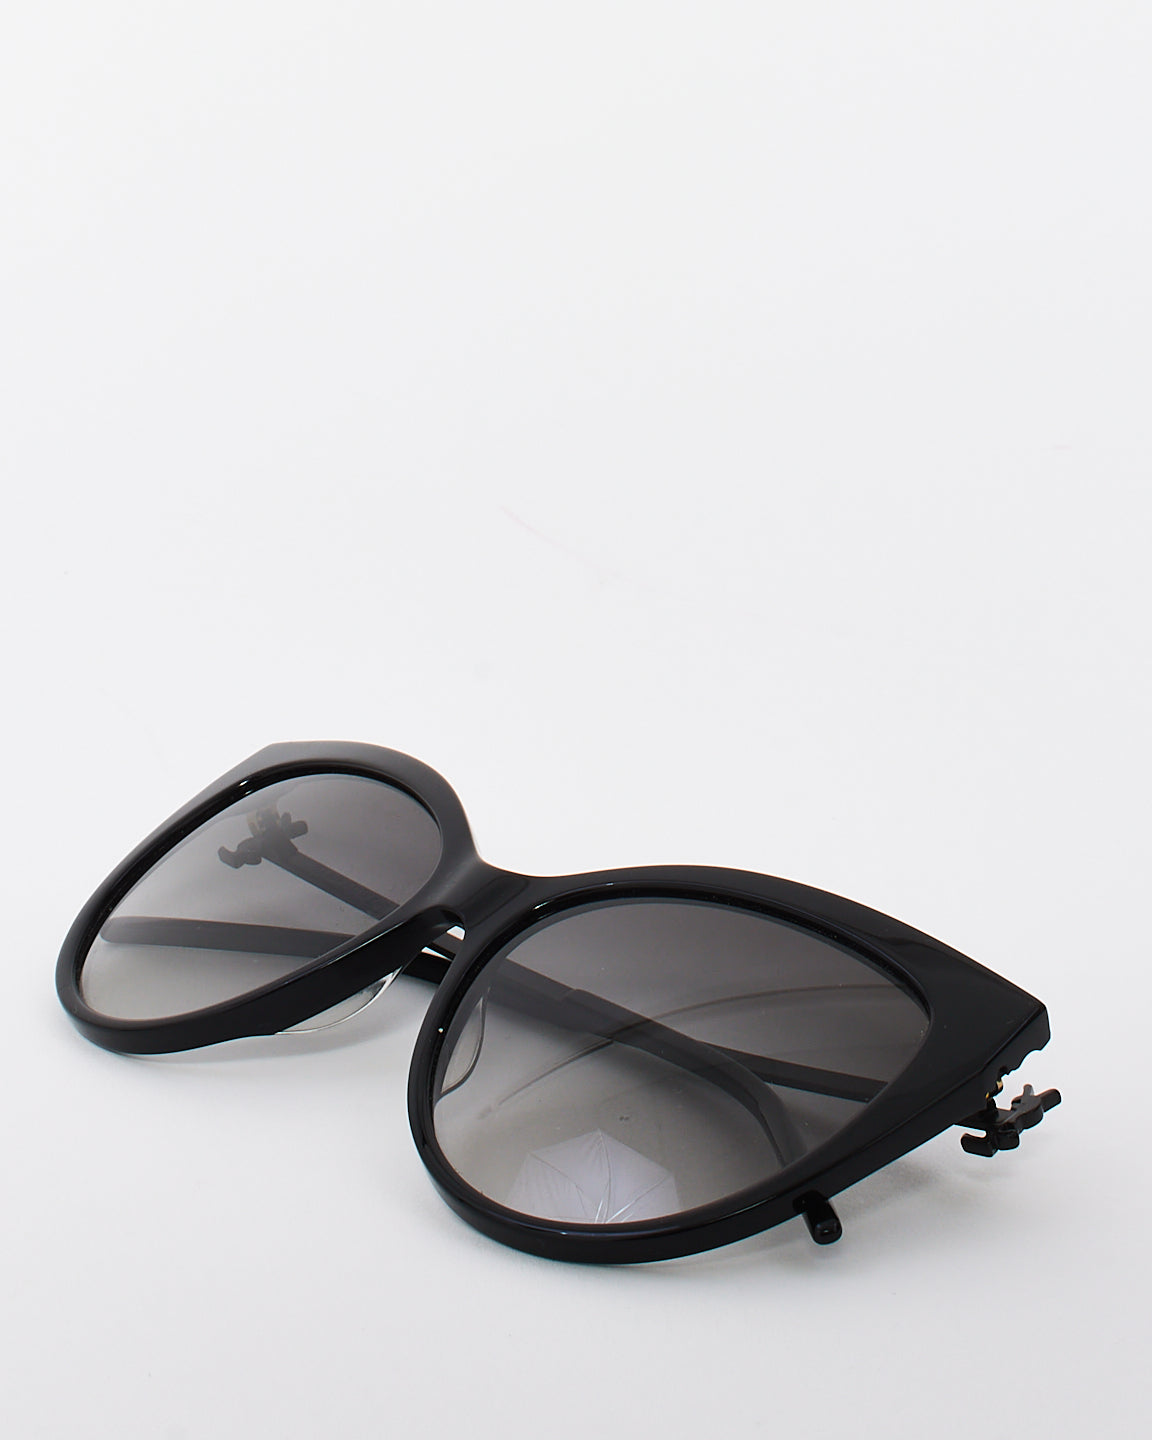 Saint Laurent Black Acetate Cat Eye Sunglasses SLM48S